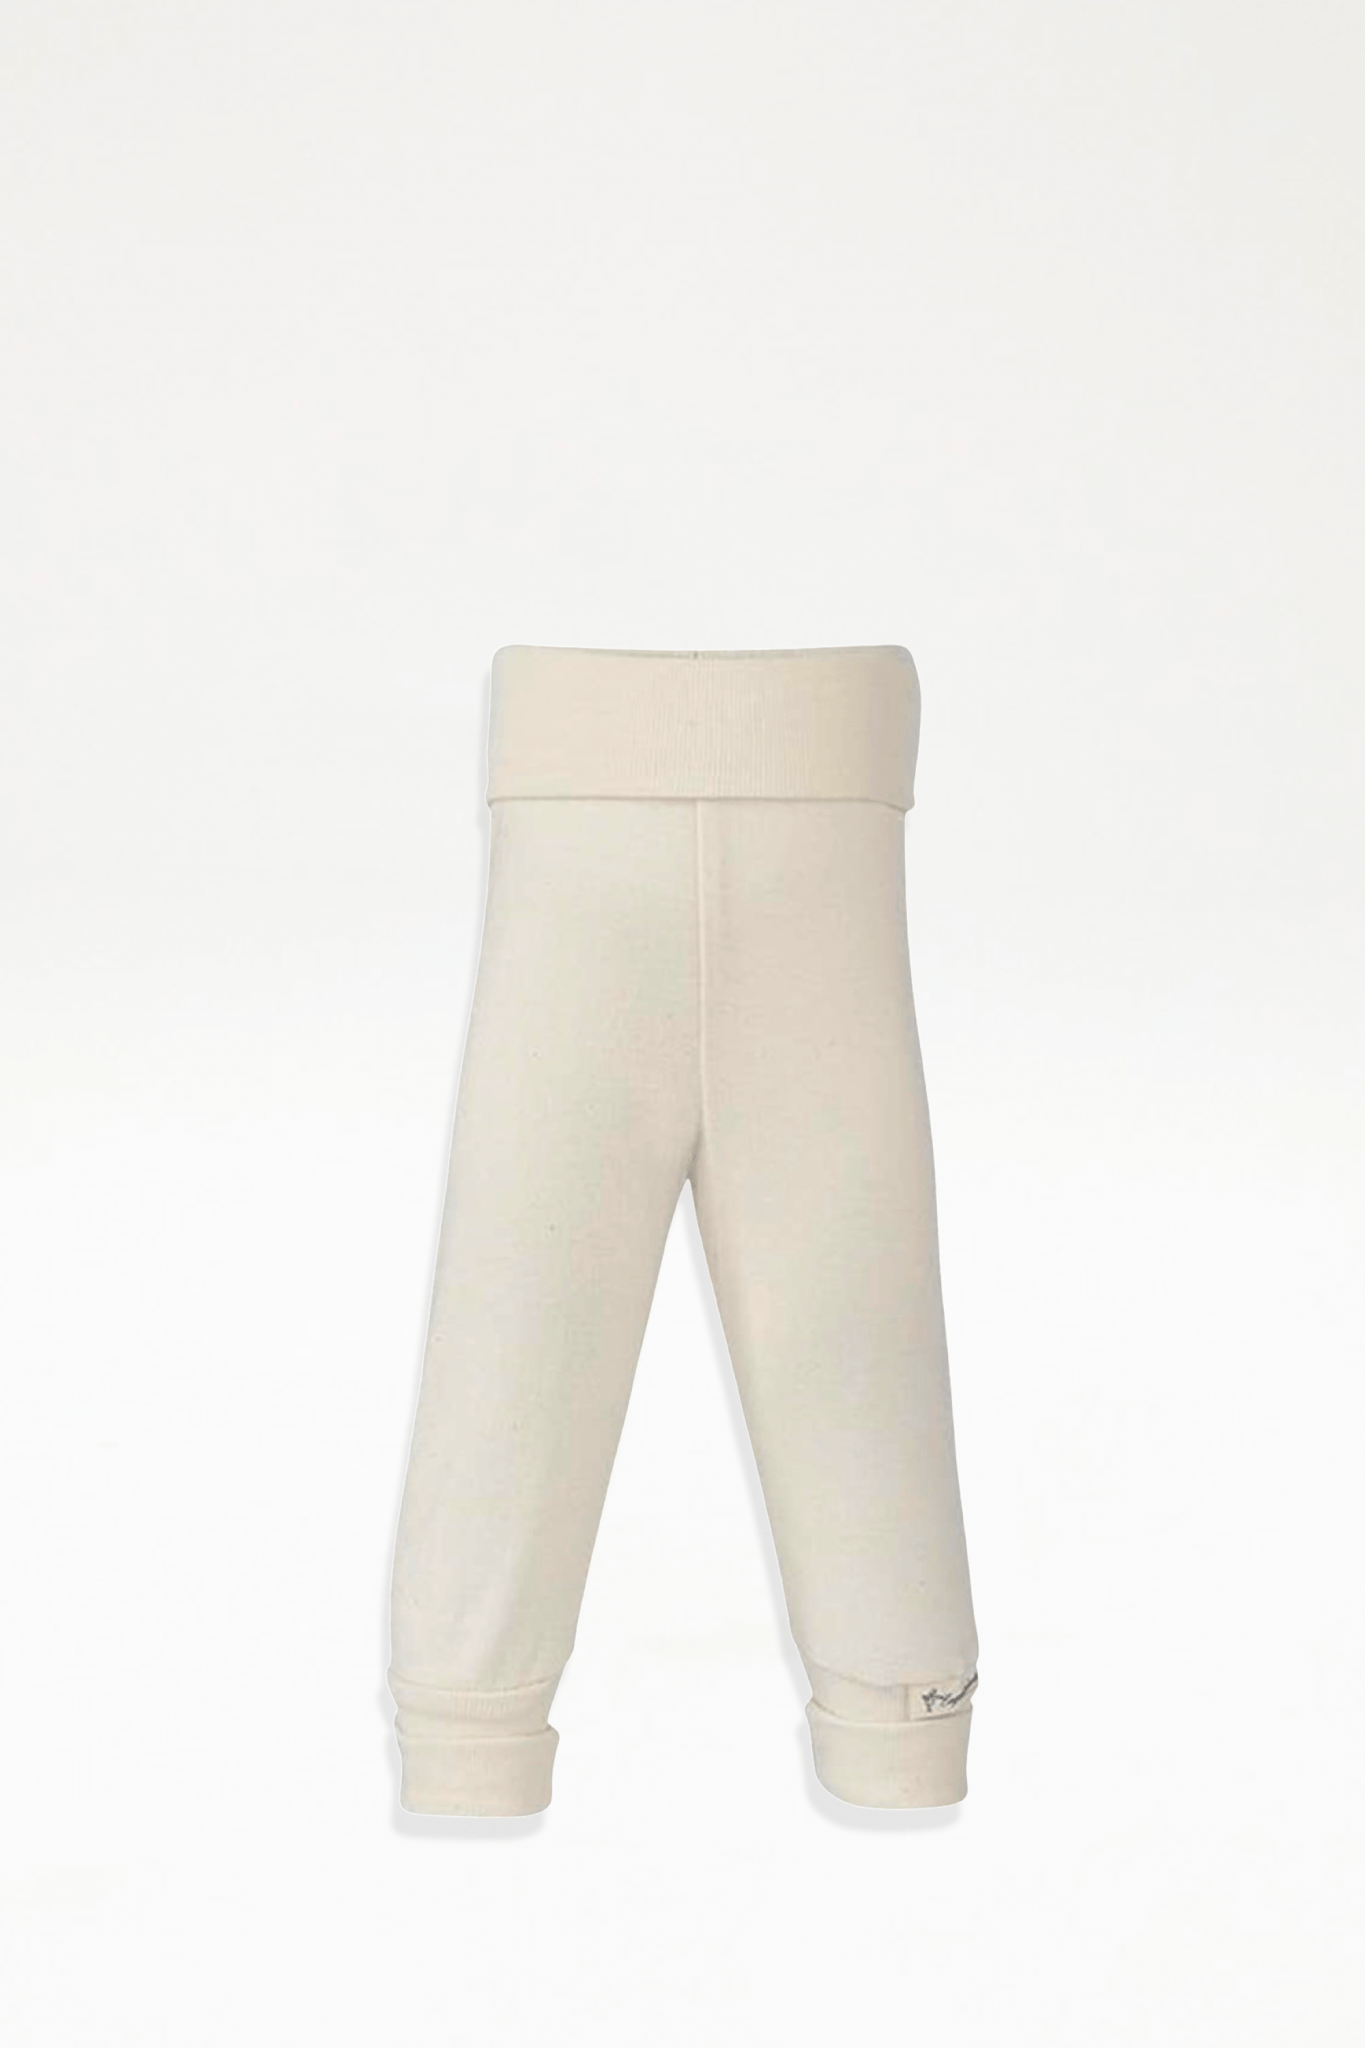 Engel - Baby Organic Cotton Pants - Natural - Ensemble Studios